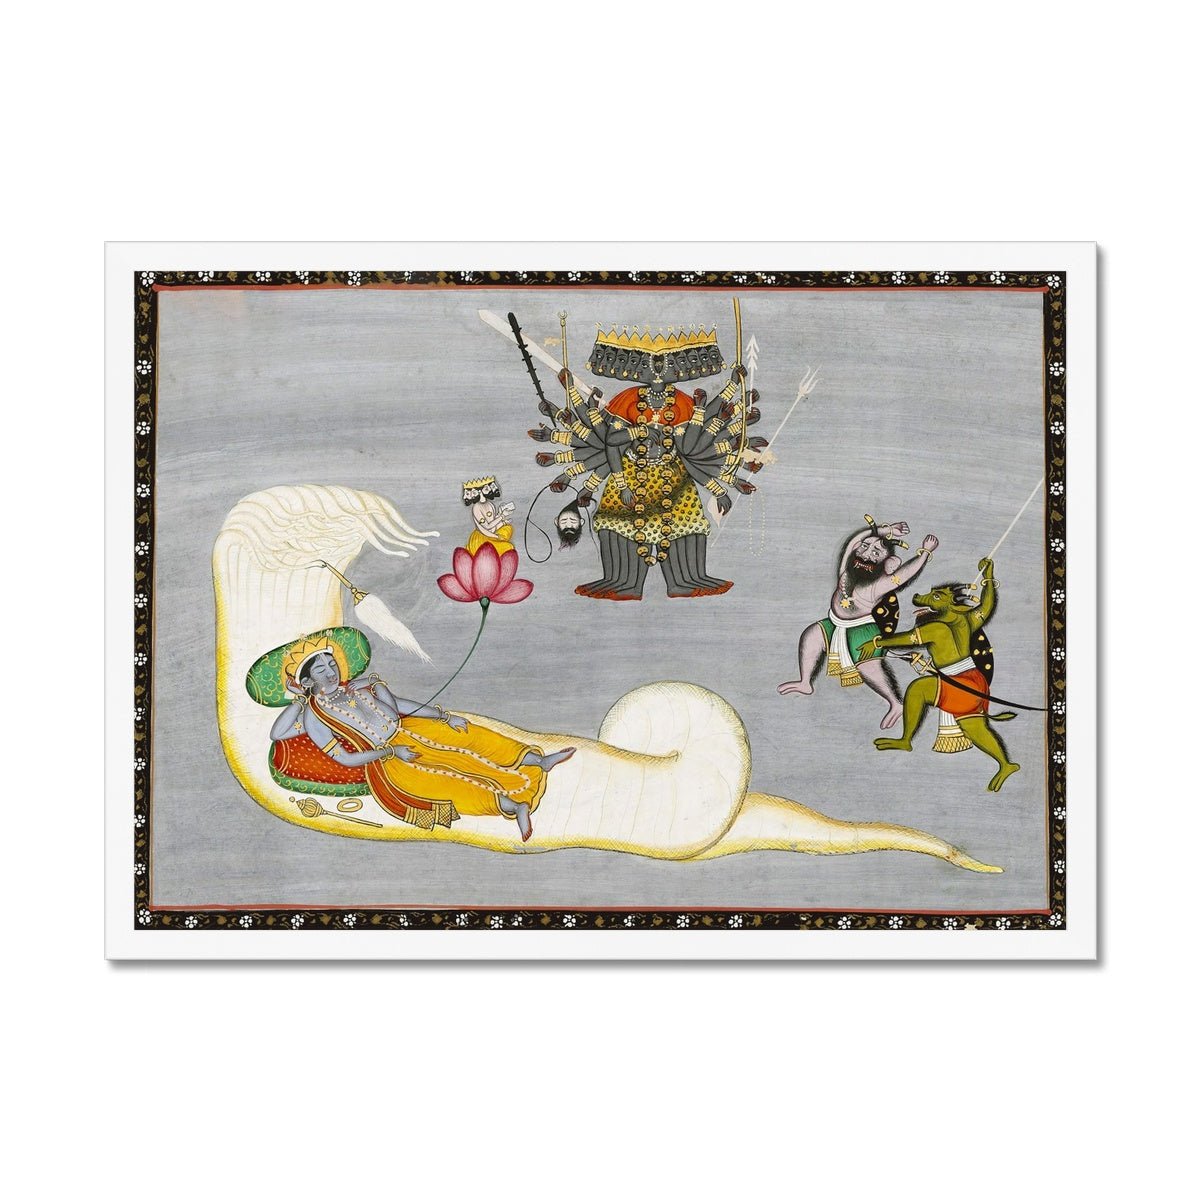 Framed Print A4 Landscape / White Frame Vishnu with Demons and Naga, Antique Indian Hindu Folk Art, 19th Century Traditional Vedic Framed Art Print